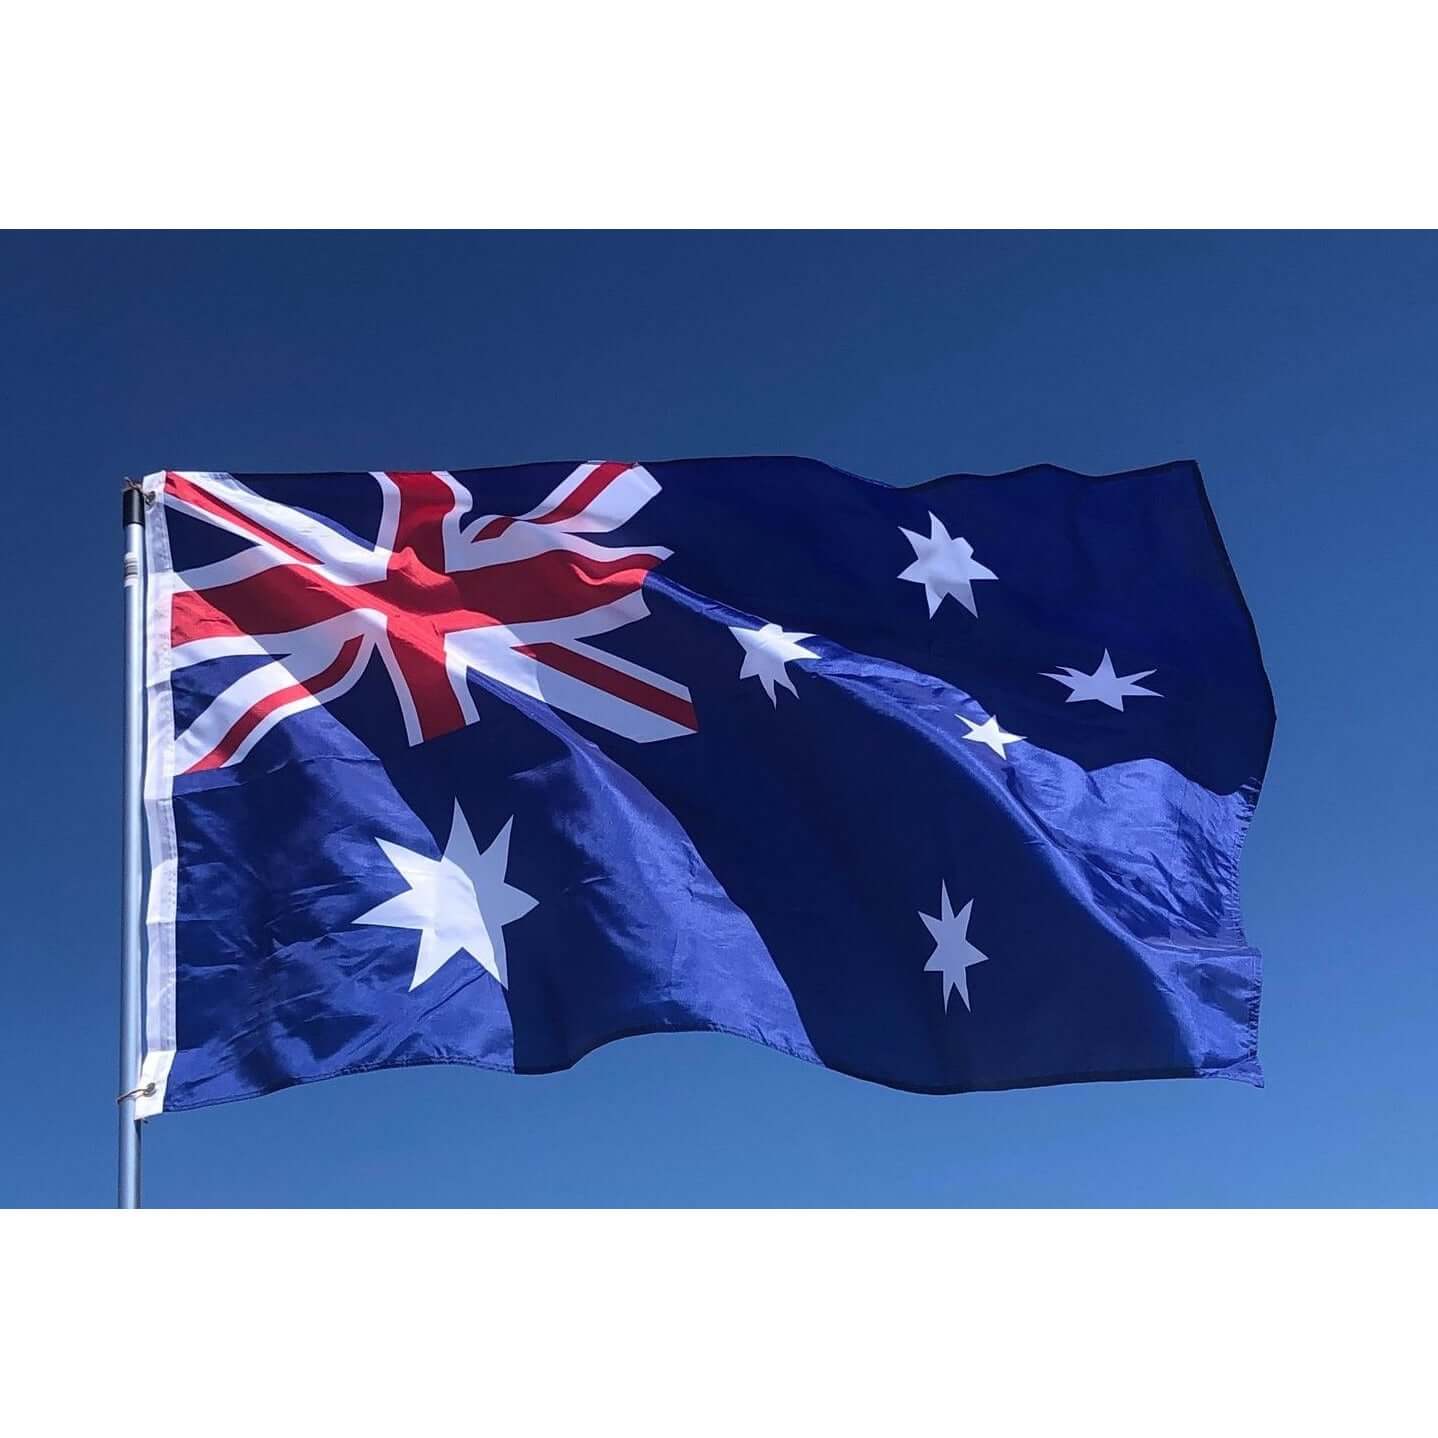 Australian Flag - Large and Durable - Sunny Sydney Australia - Famous Outdoor Gear Store